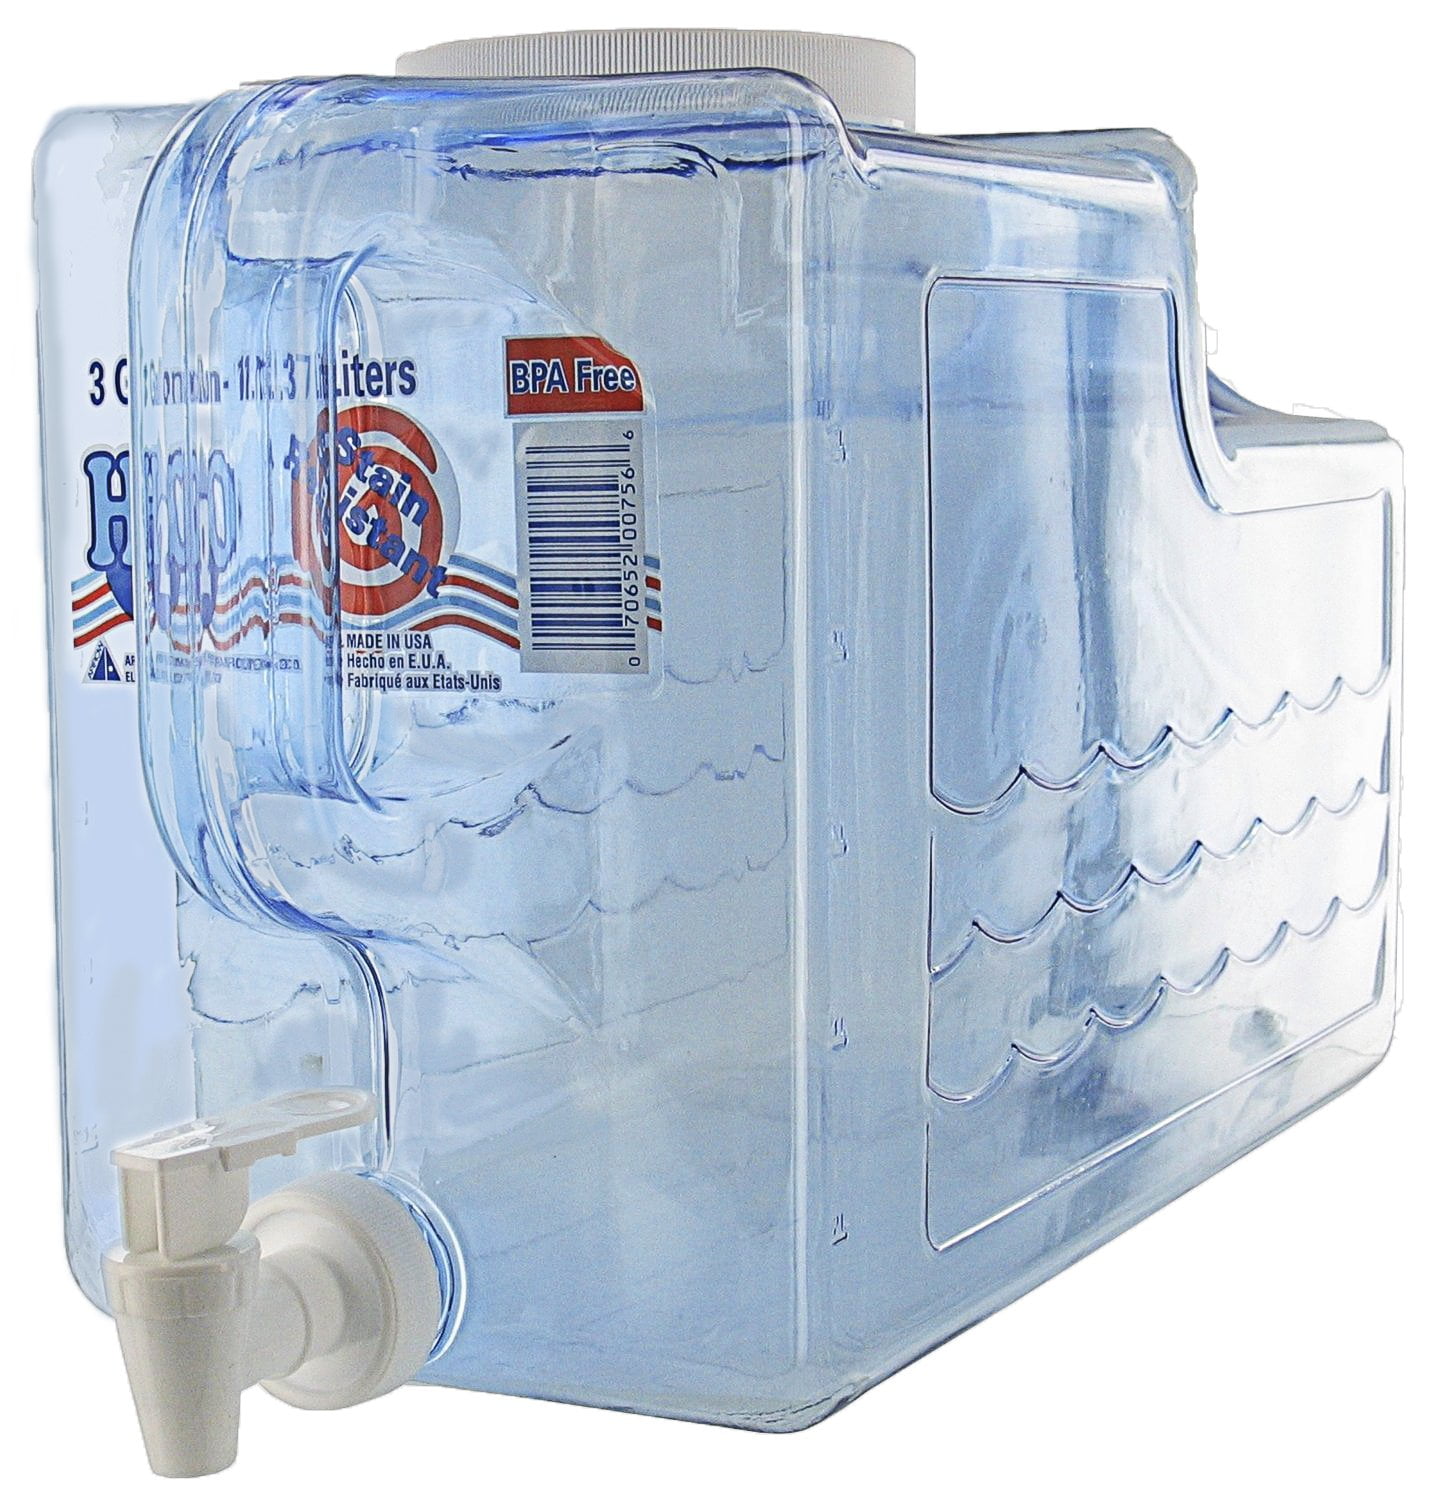 Sperse Insulated Beverage Dispenser - 3 Gallon Dispenser